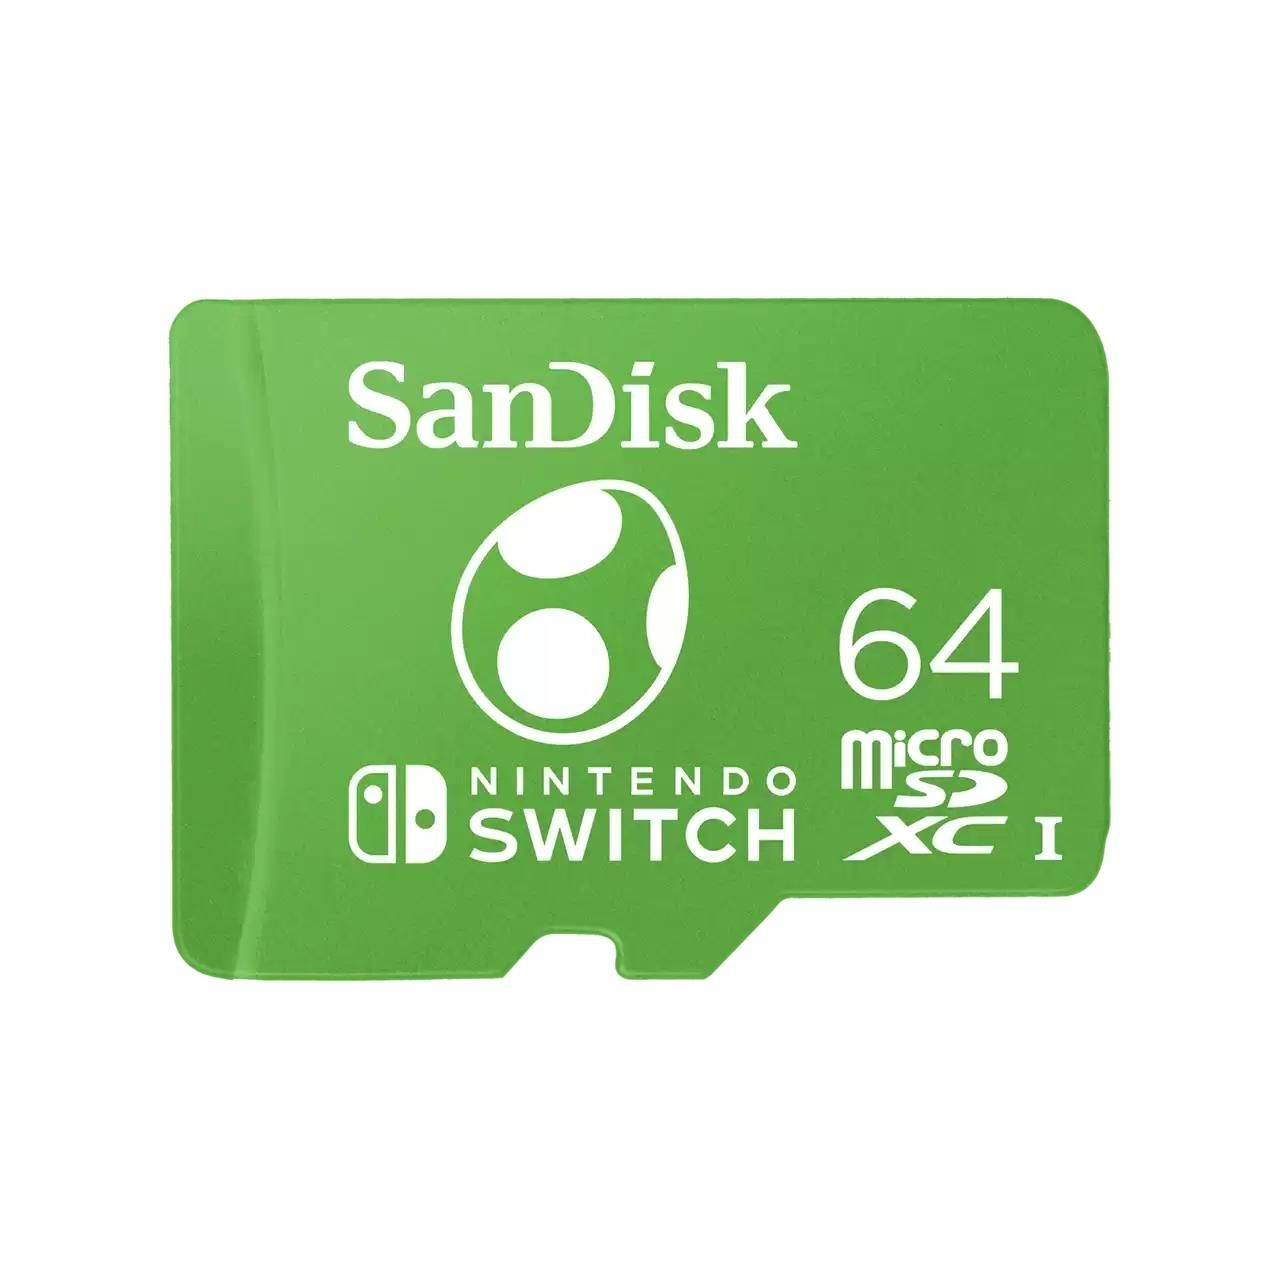 SanDisk 64Gb MicroSDXC Scheda